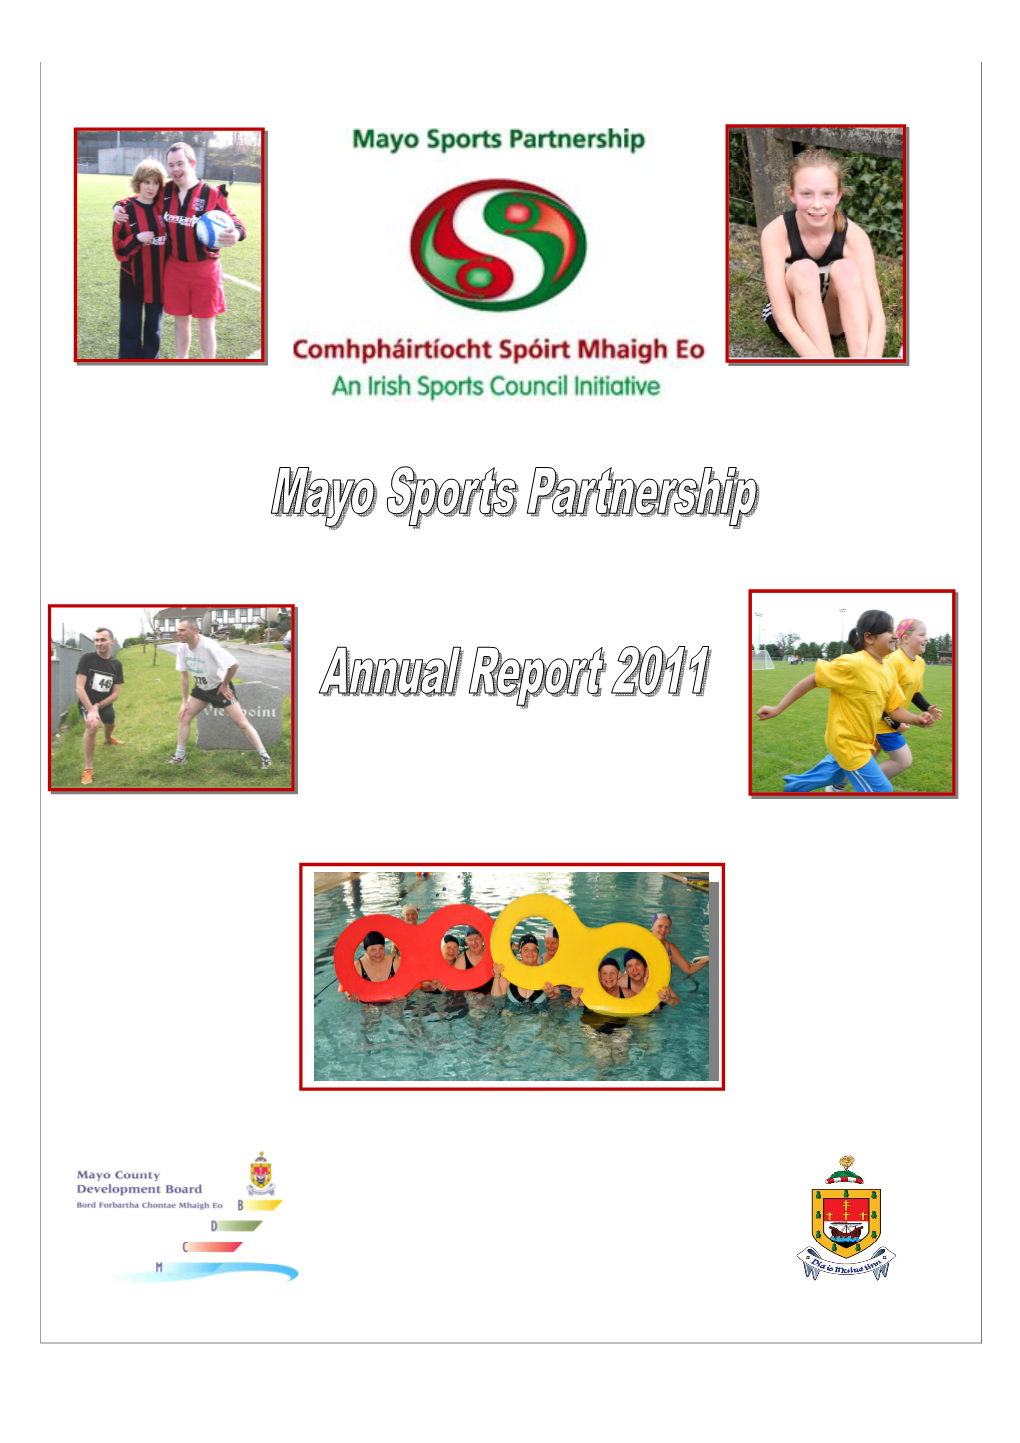 03/11/2020 Mayo Sports Partnership Annual Report 2011